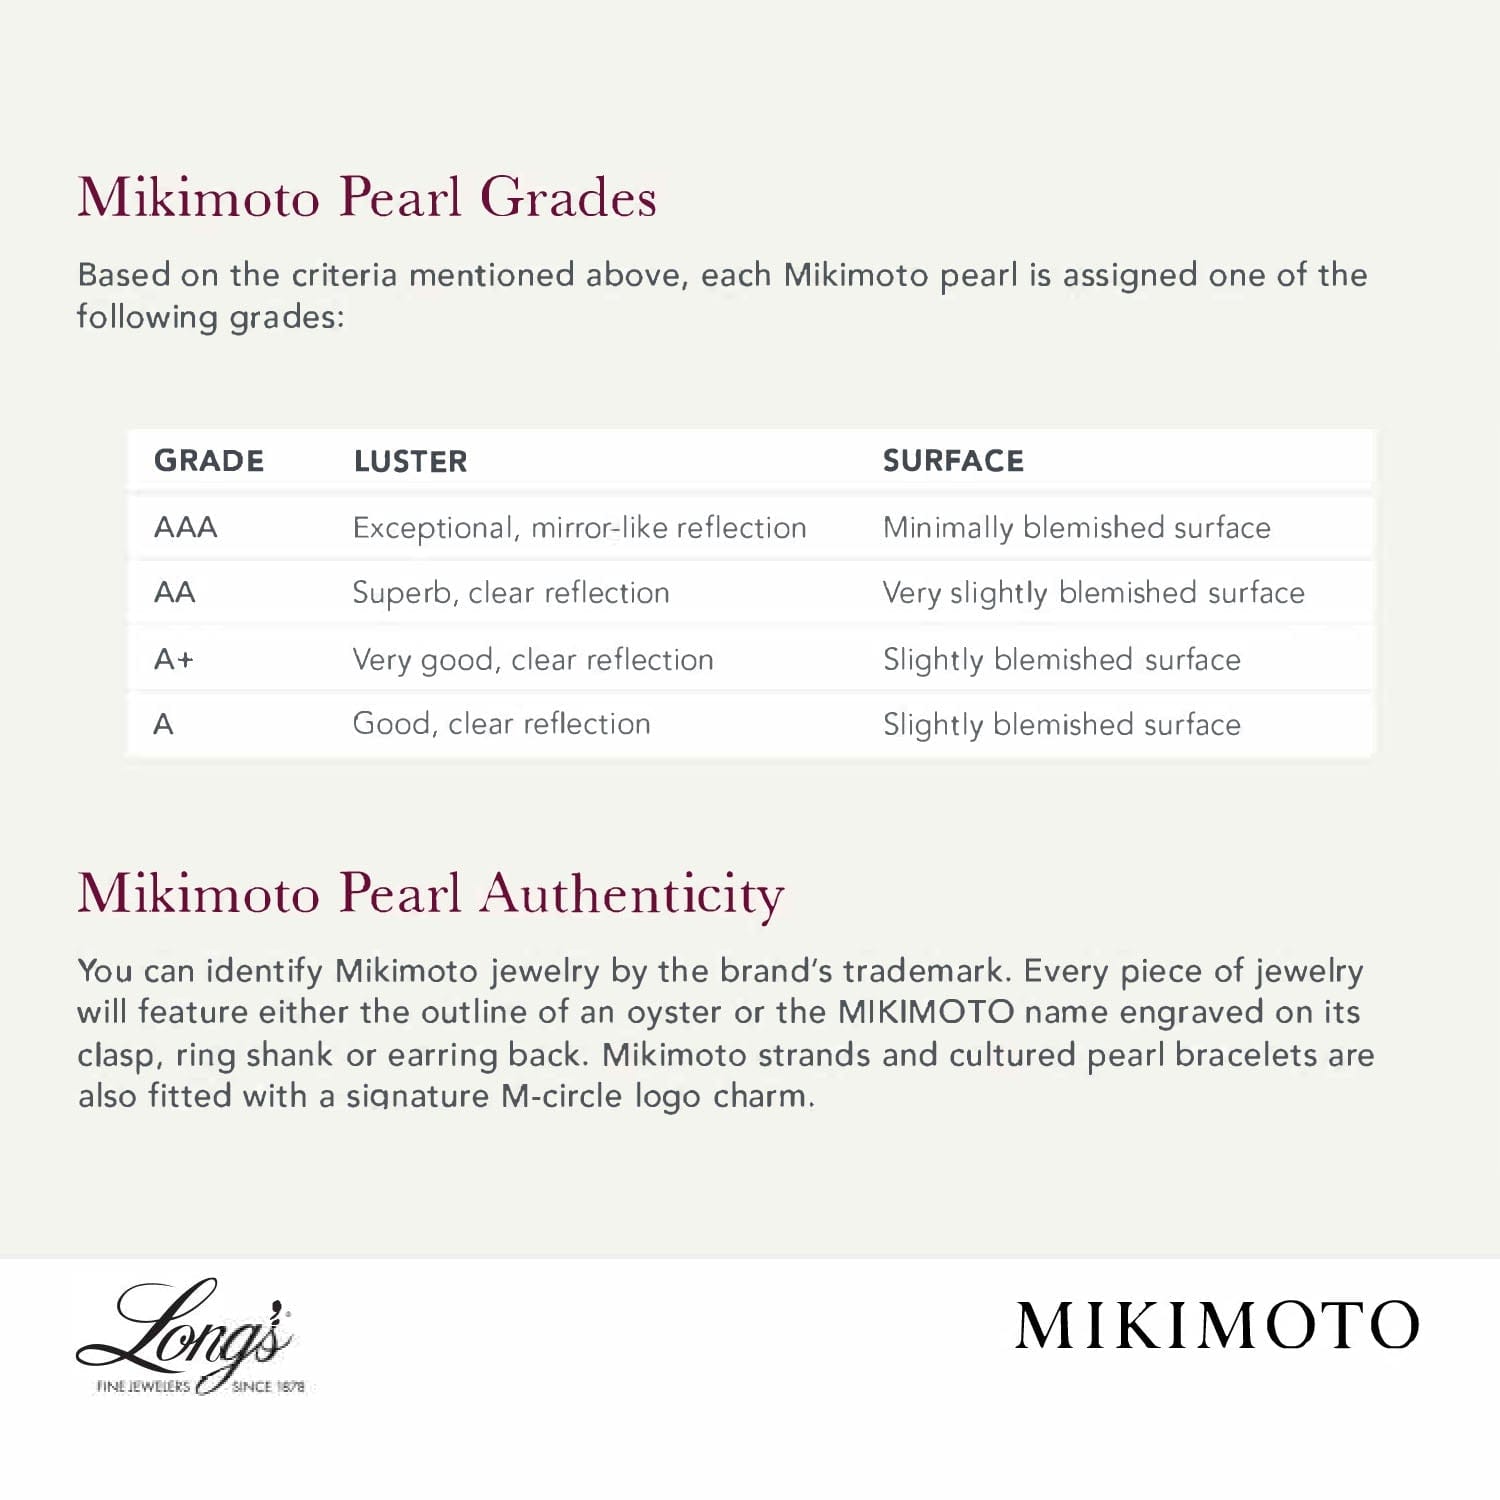 Mikimoto 18K White Gold Akoya Cultured Pearl Graduated Strand Necklace